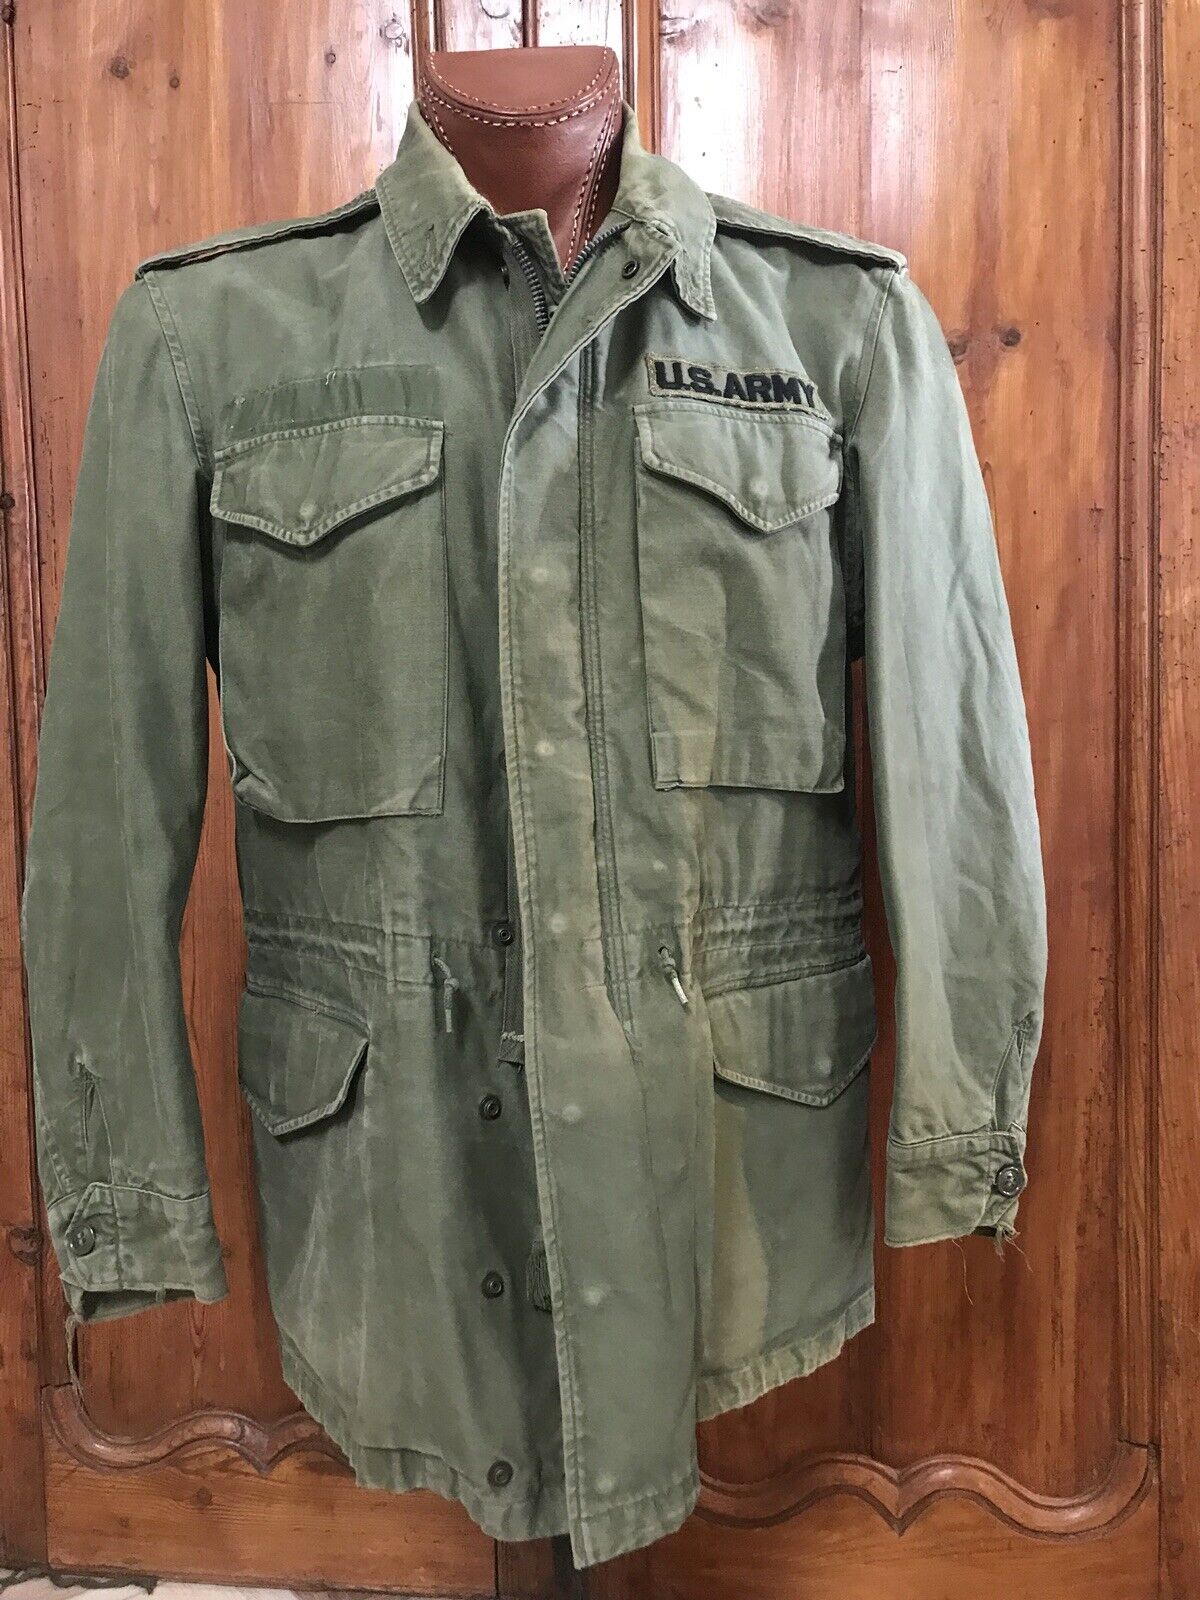 Authentic OG 107 Vietnam 1964 Military Field Army Jacket Coat Reg Small Activist